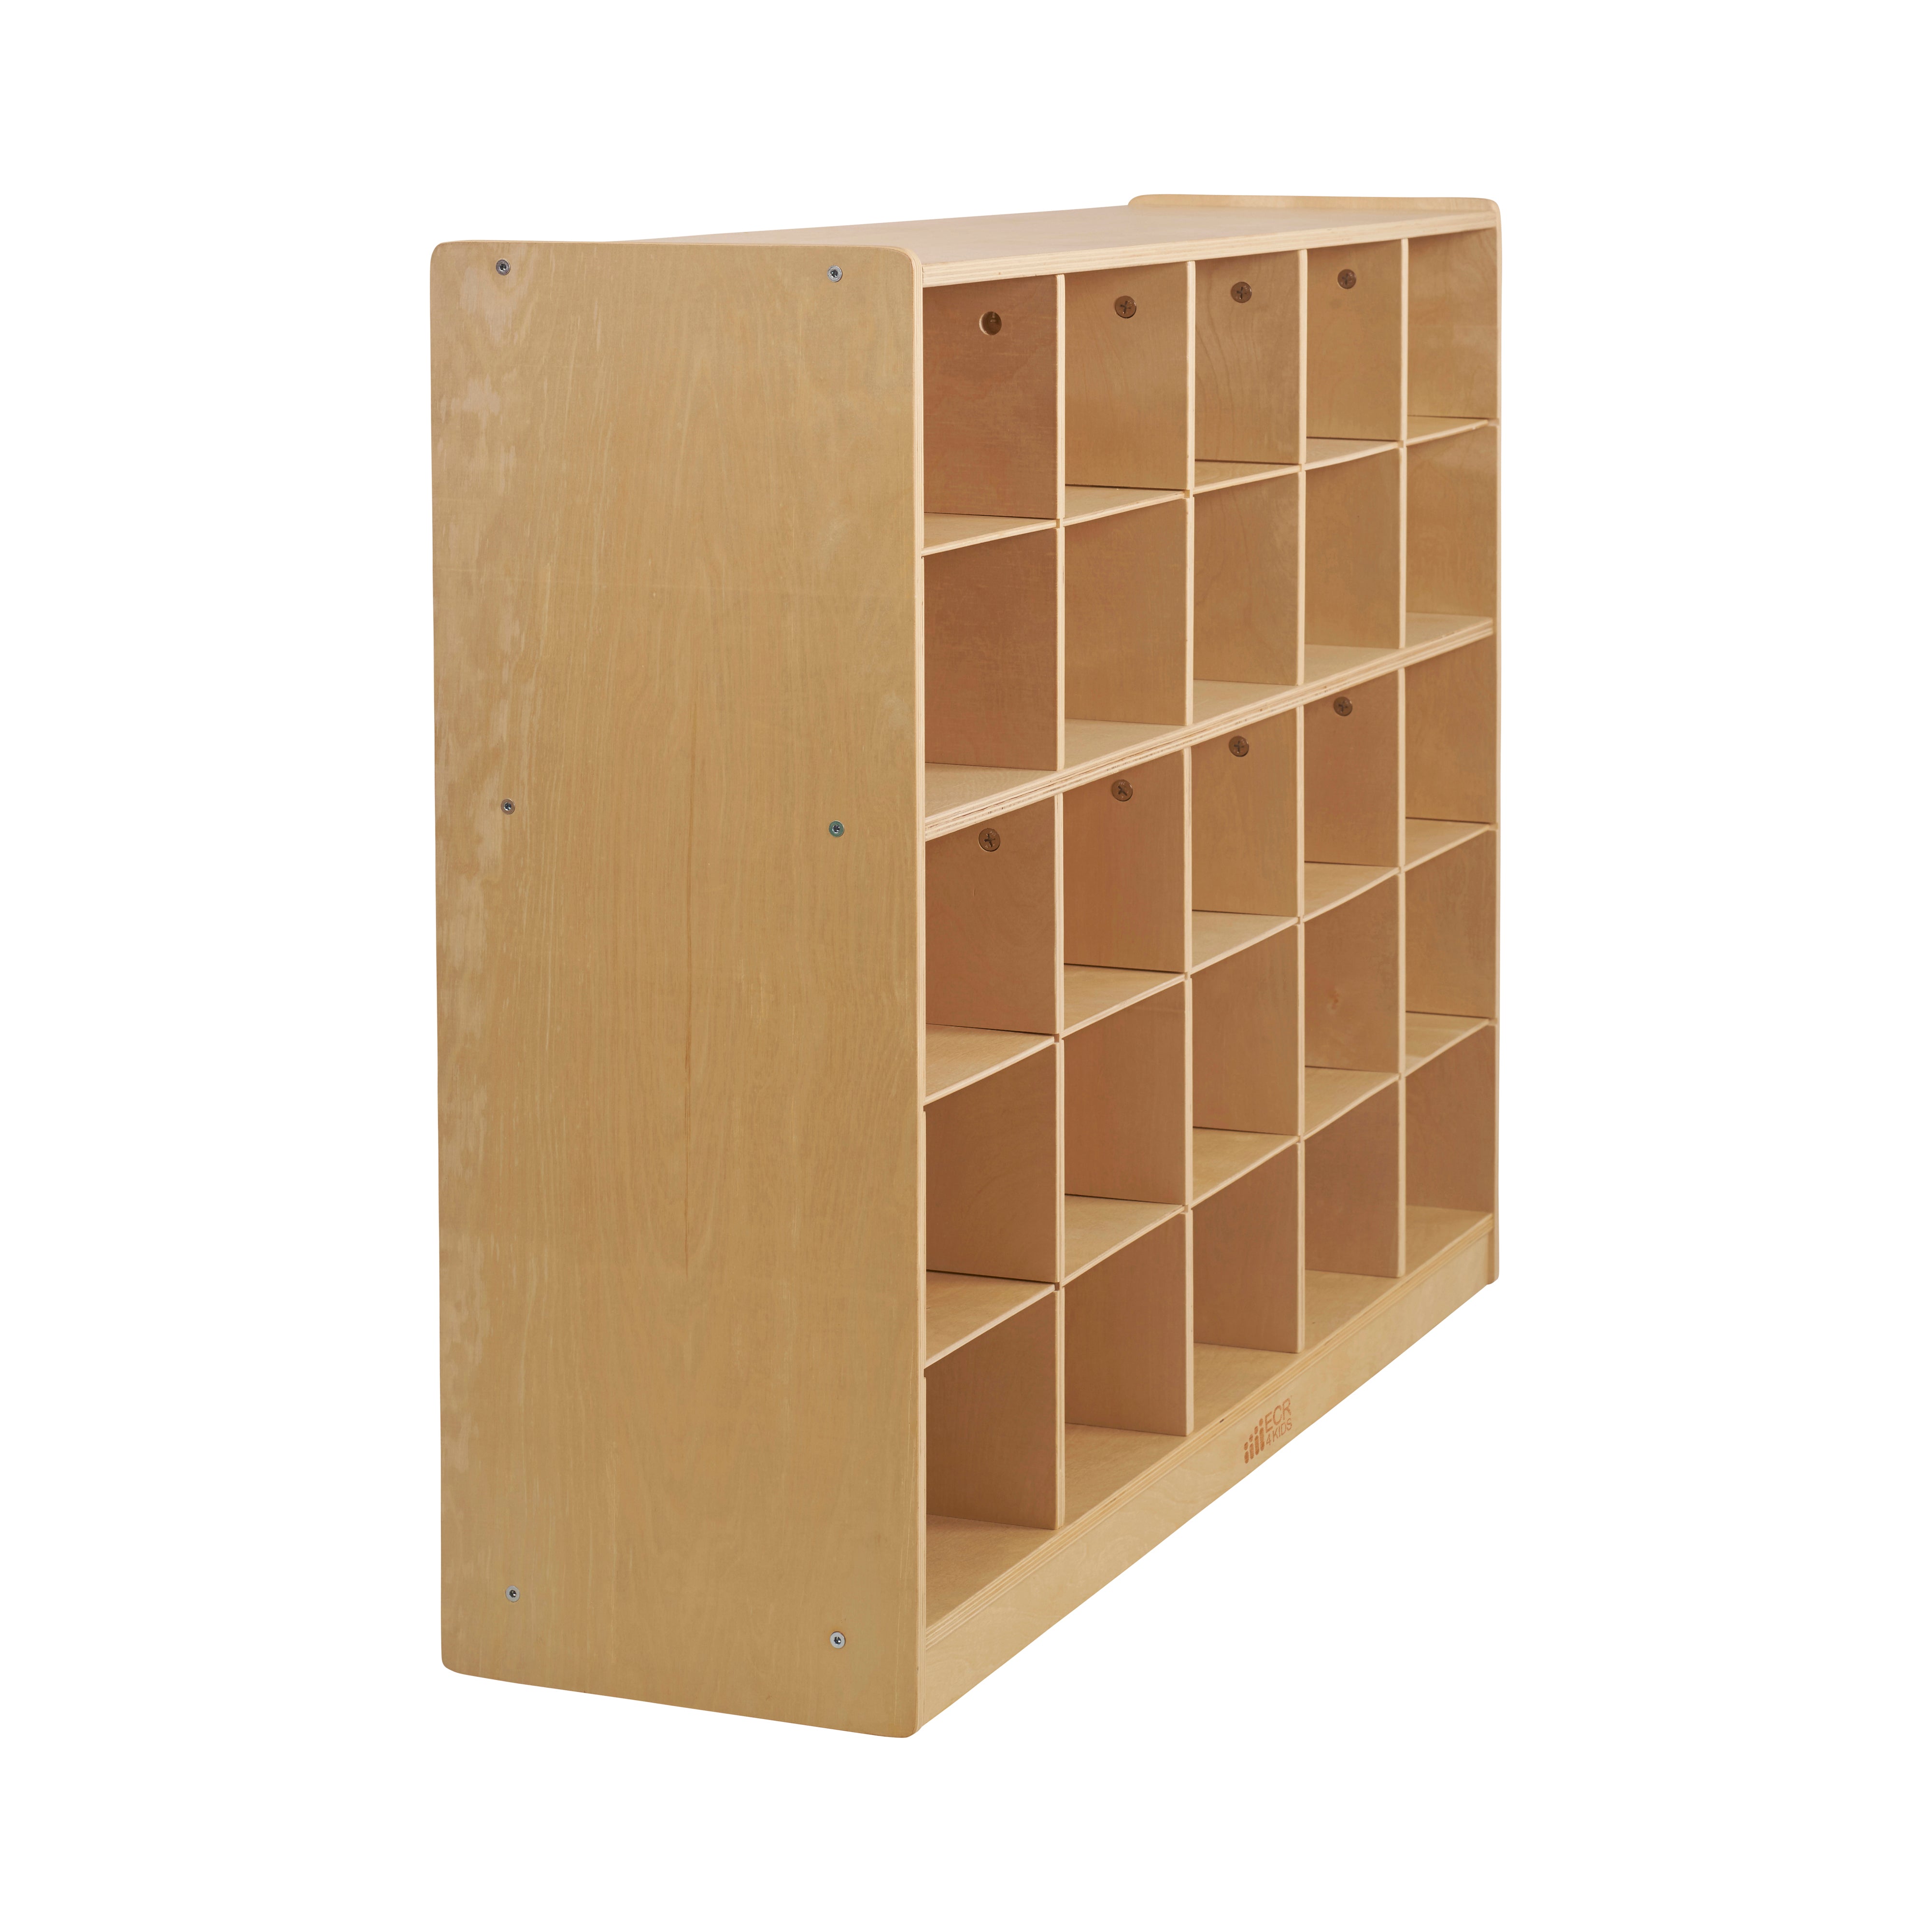 25 Cubby Storage Cabinet, Eco-Friendly Birch Plywood Storage with 25 Tray Slots